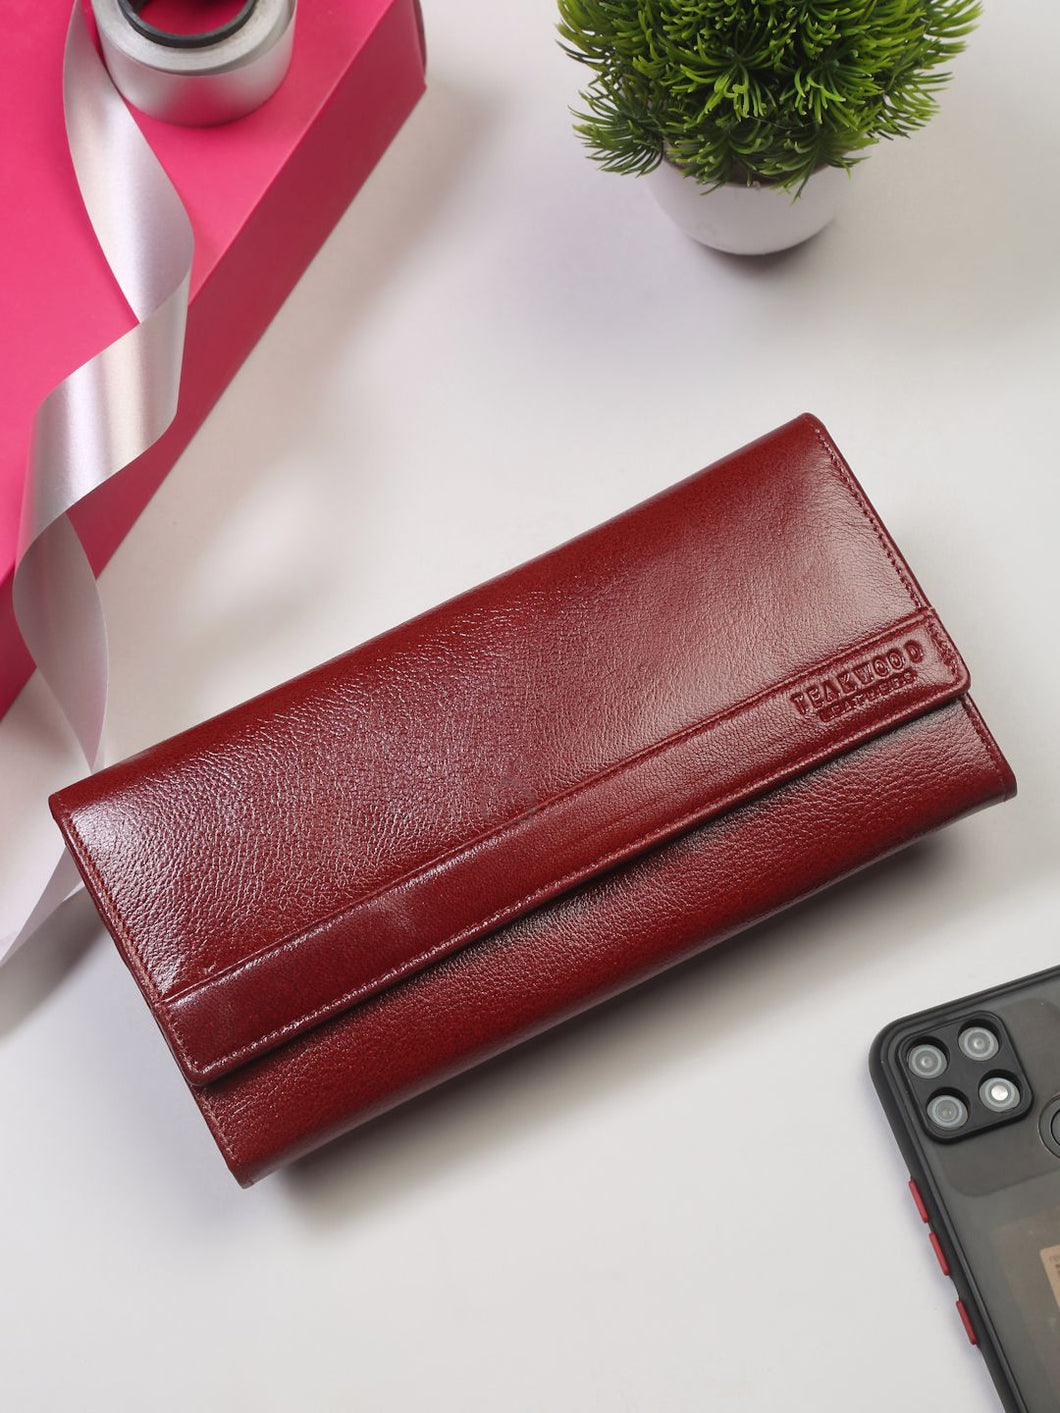 Leather Wallet for Women (Burgundy) - beranleather